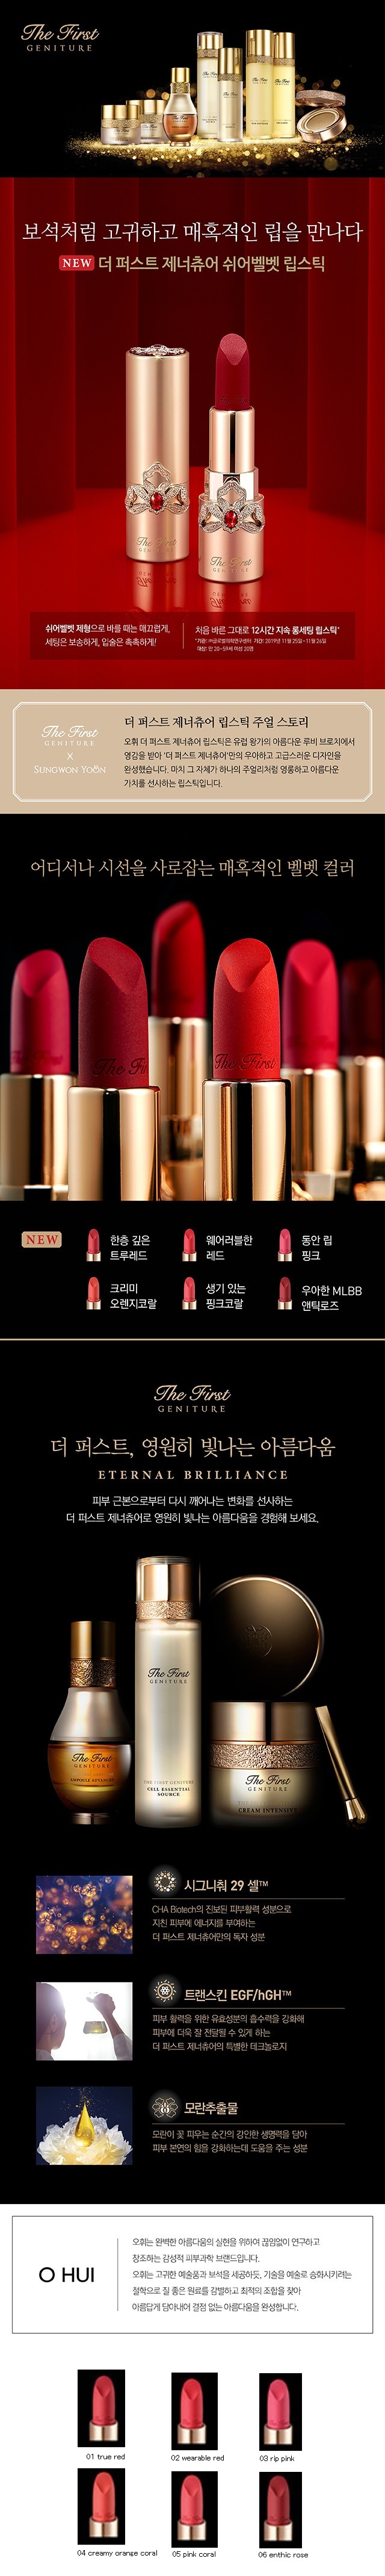 OHUI The First Geniture Sheer Velvet Lipstick korean skincare product online shop malaysia China poland1